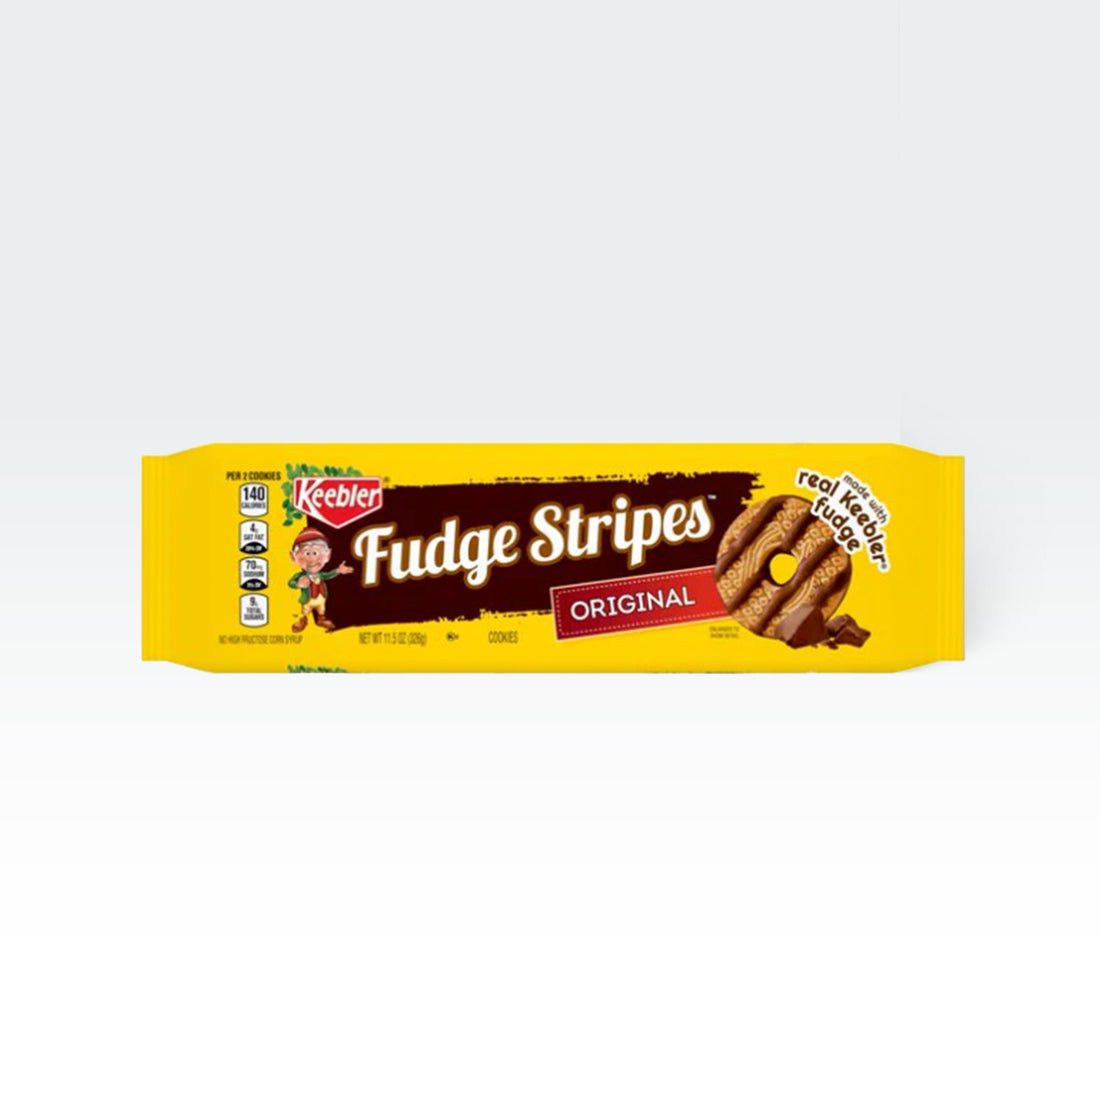 Keebler Fudge Stripes Original Cookies, 11.5 oz